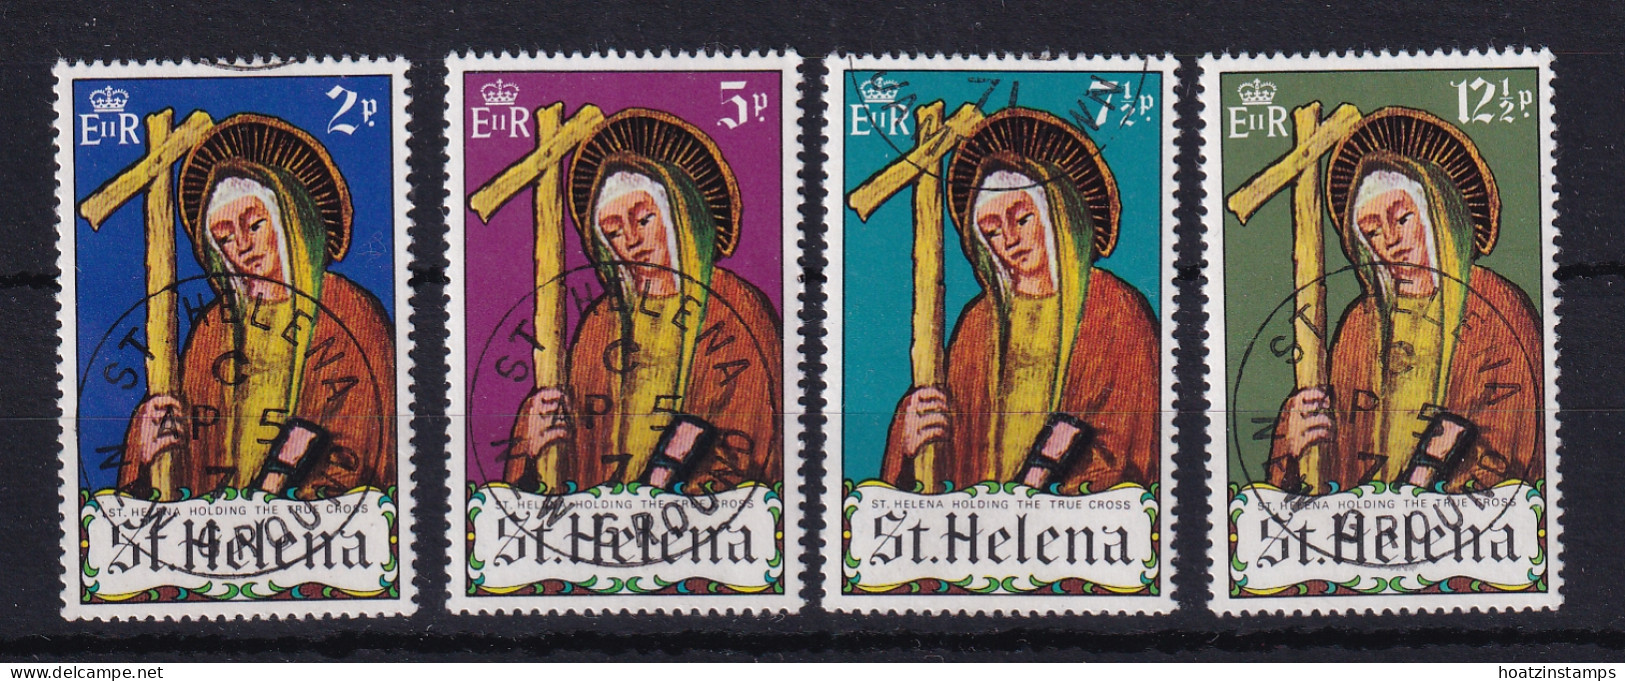 St Helena: 1971   Easter    Used - St. Helena